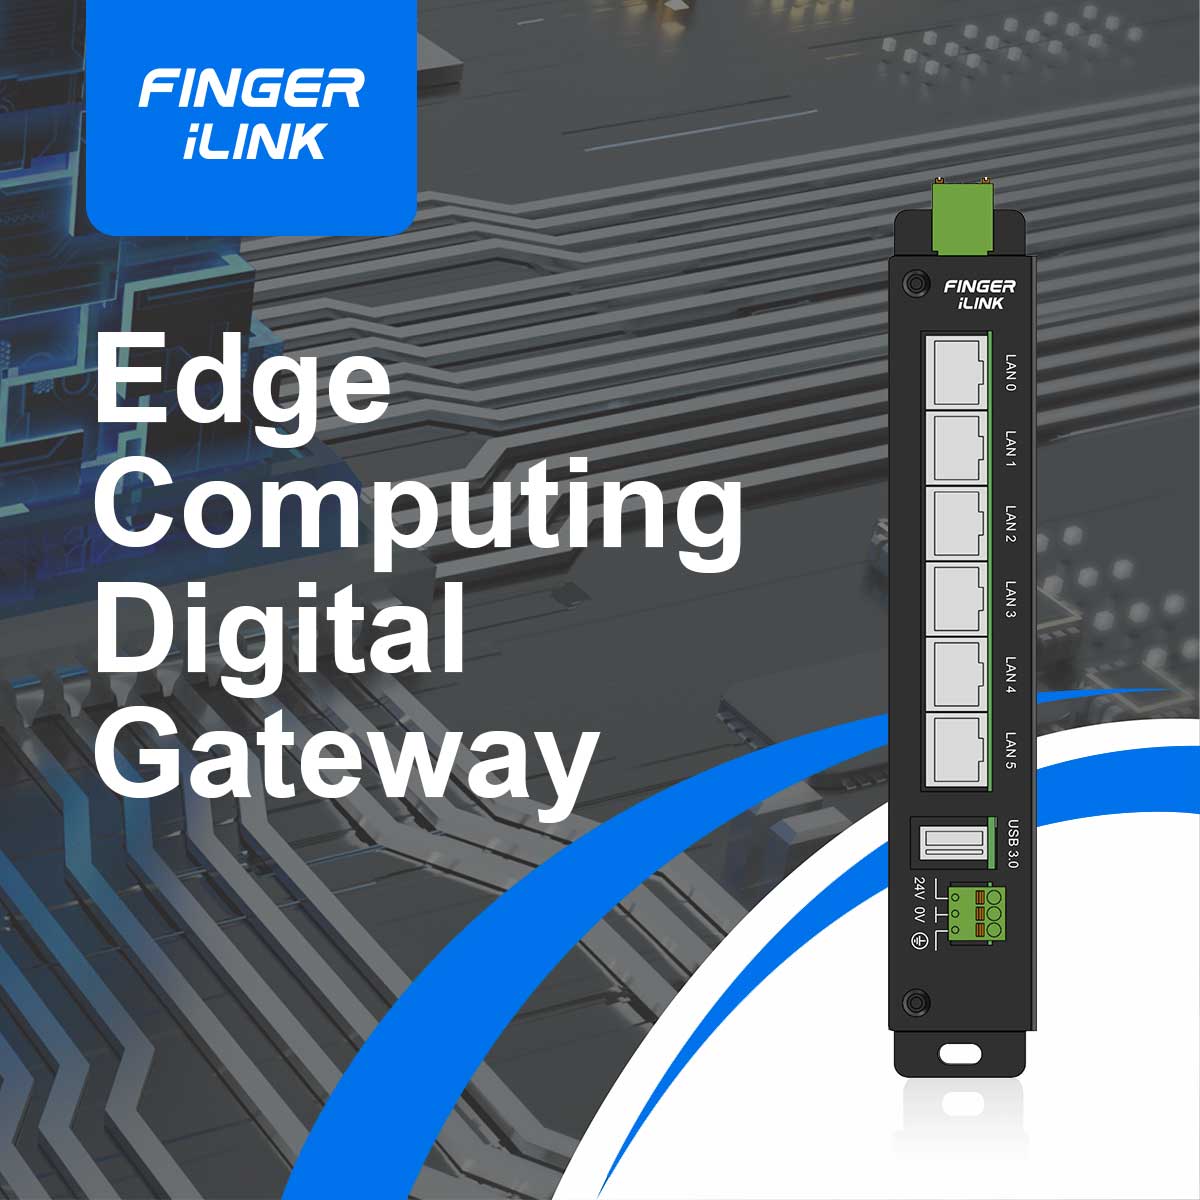 Finger iLink Digital Gateway Upgraded